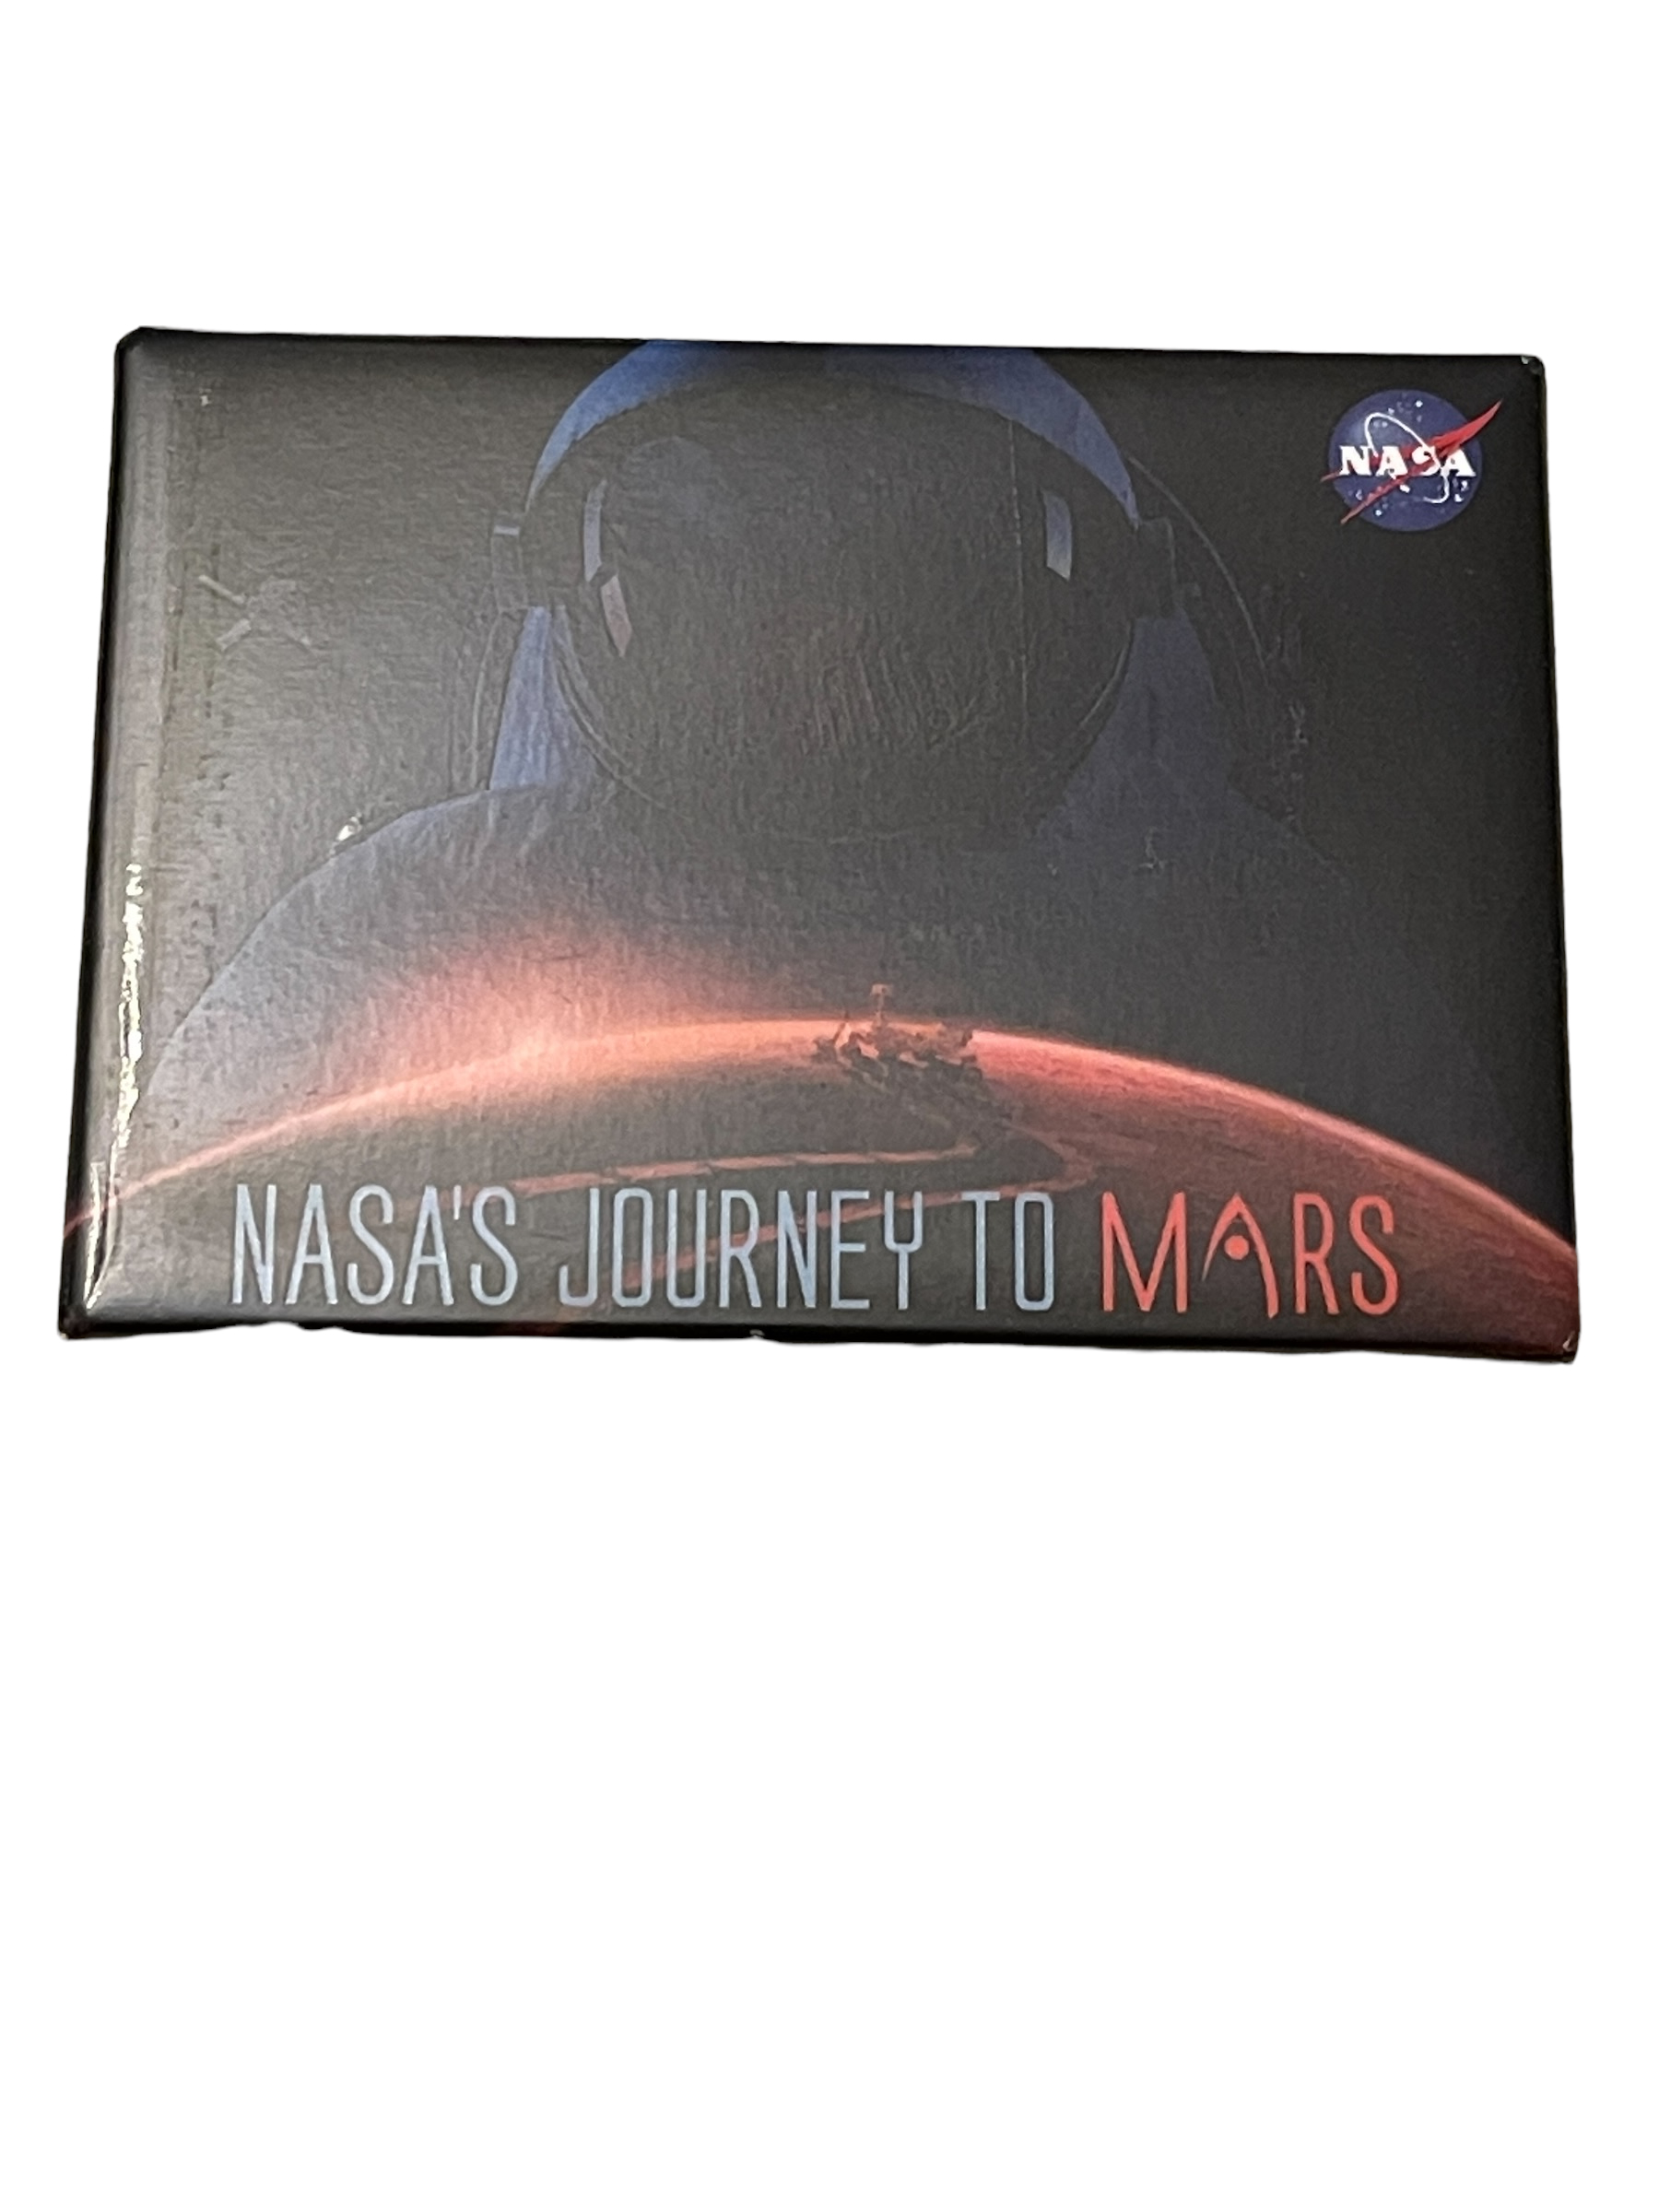 NASA Journey to Mars Staff Issue Fridge Magnet - Image 2 of 2